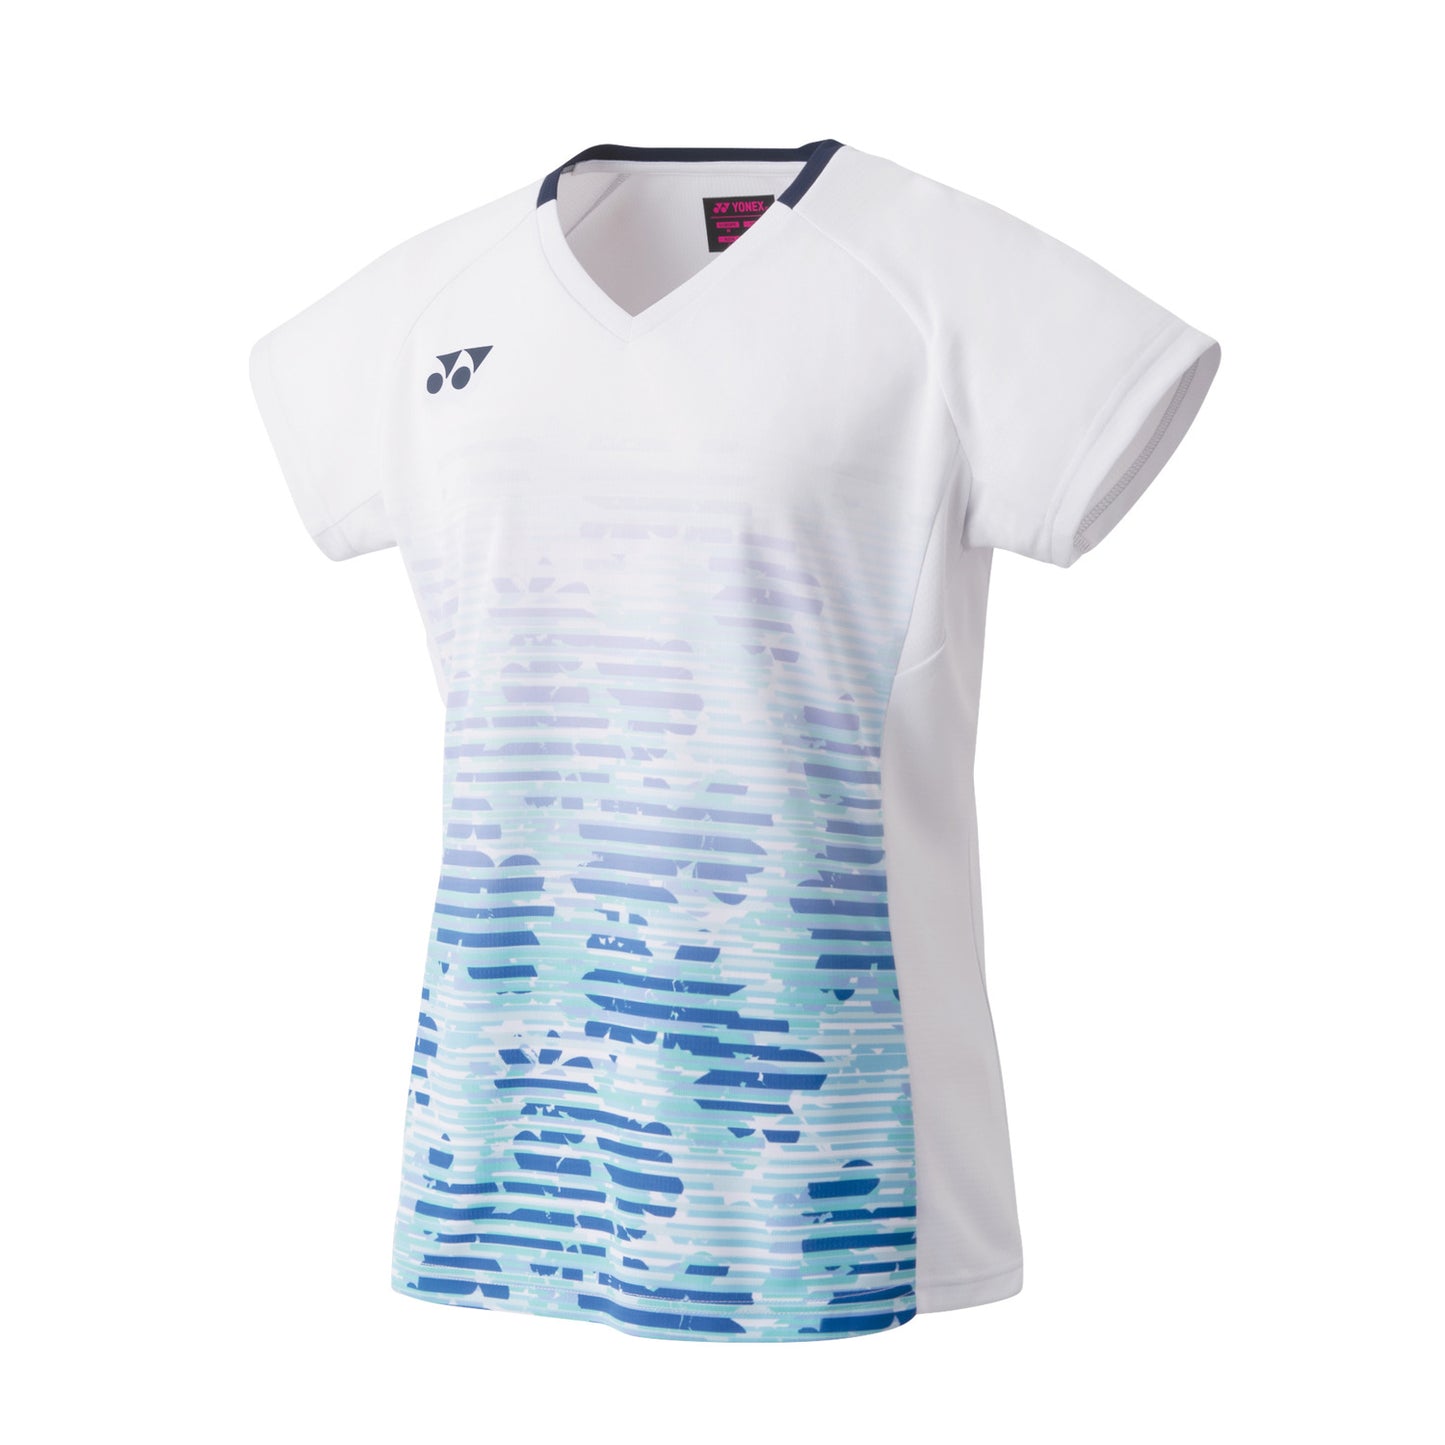 YONEX Lady's Game Shirt 20703 Team Canada - Max Sports